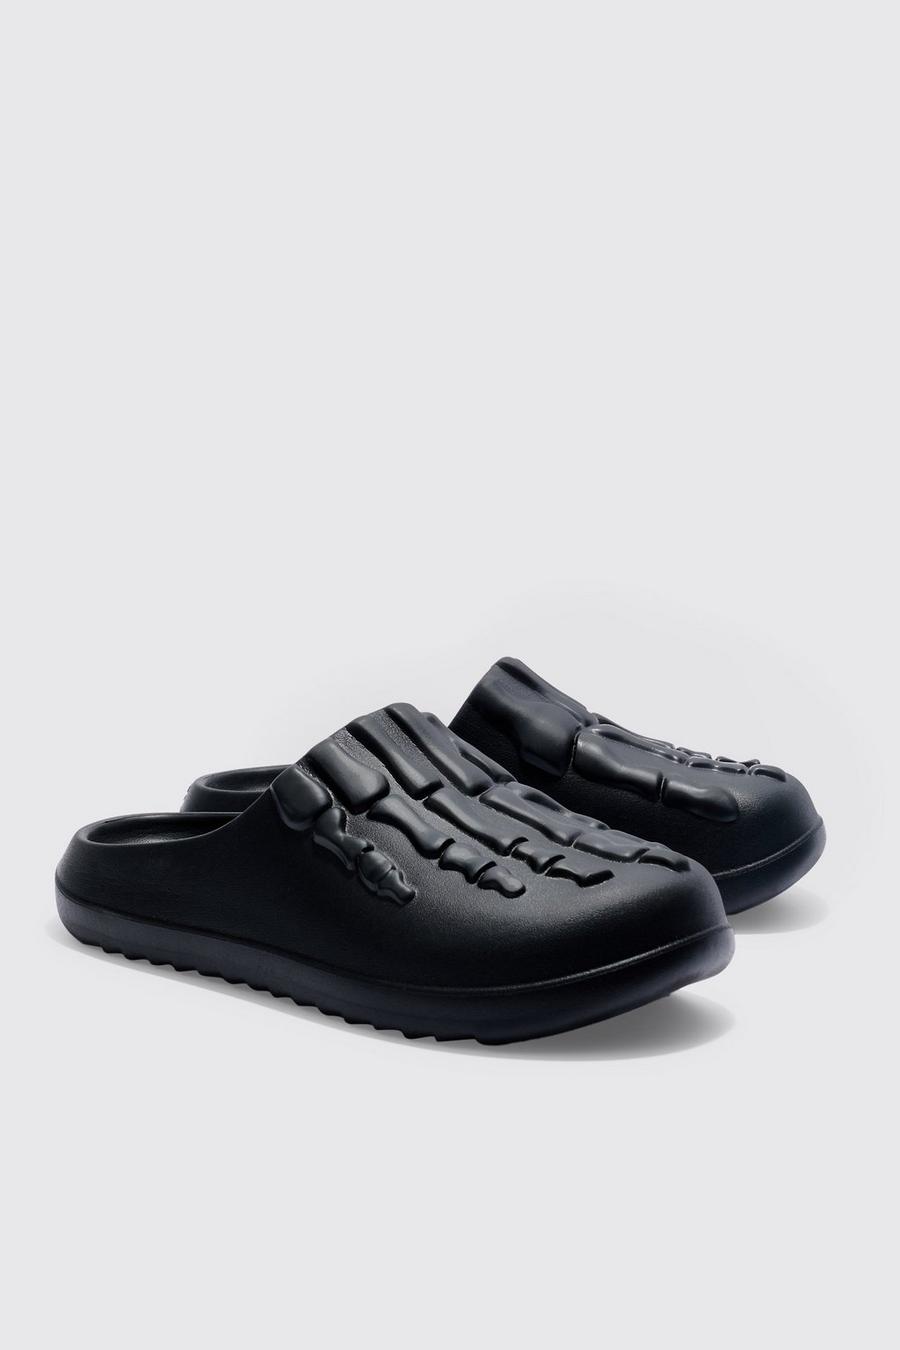 Black Cordones Custom Fit Boot 21669 Black